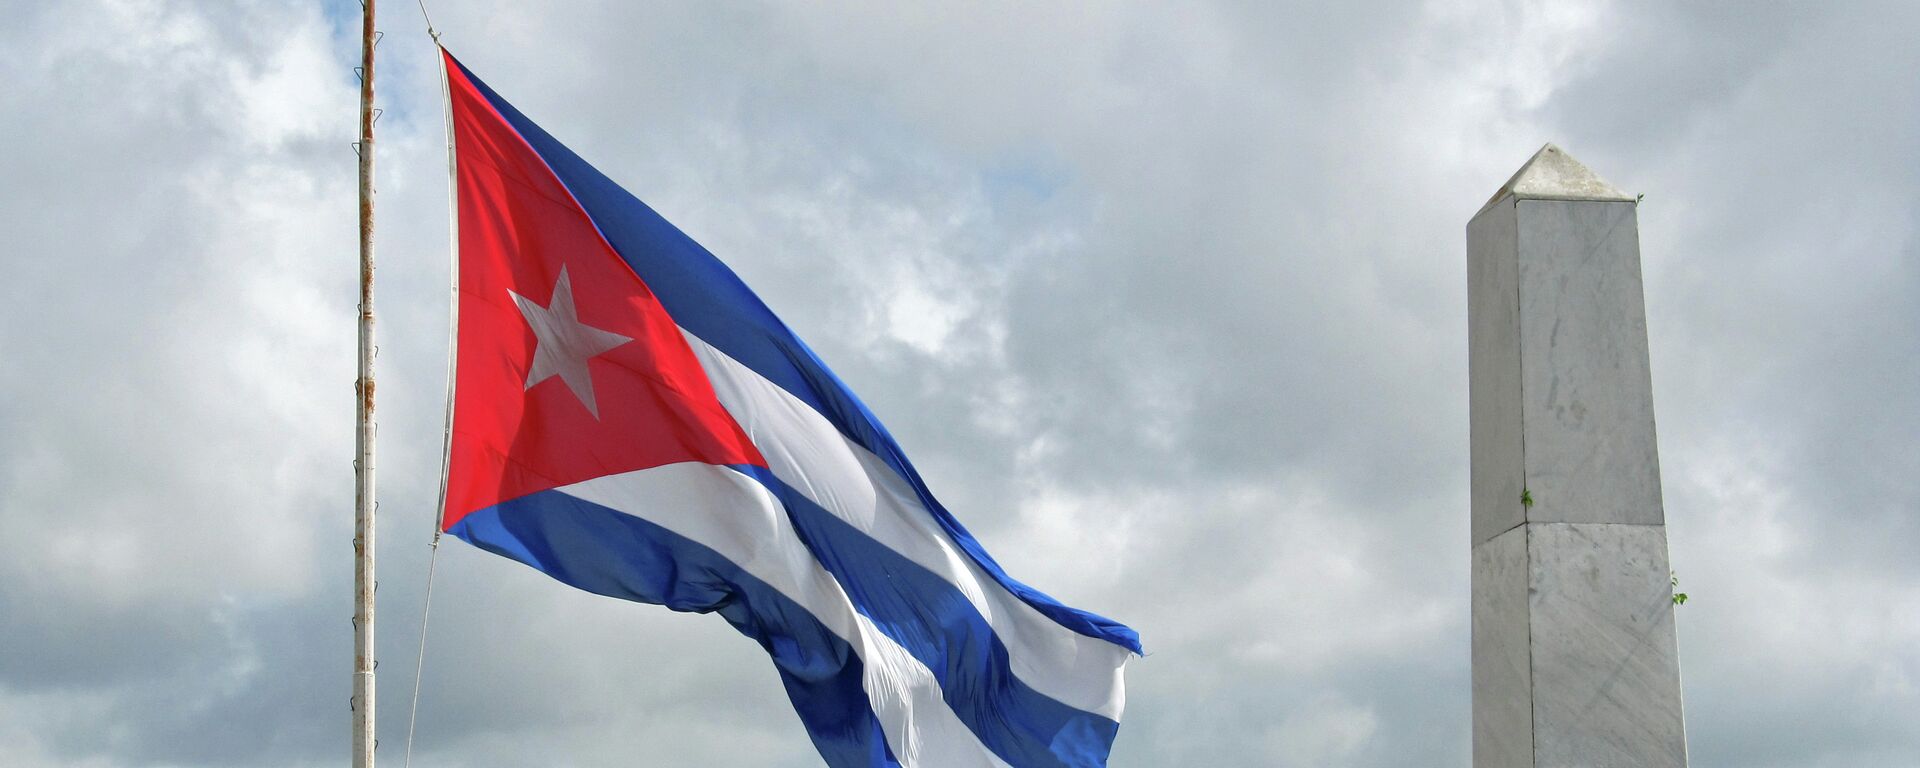 Bandera de Cuba - Sputnik Mundo, 1920, 09.04.2021